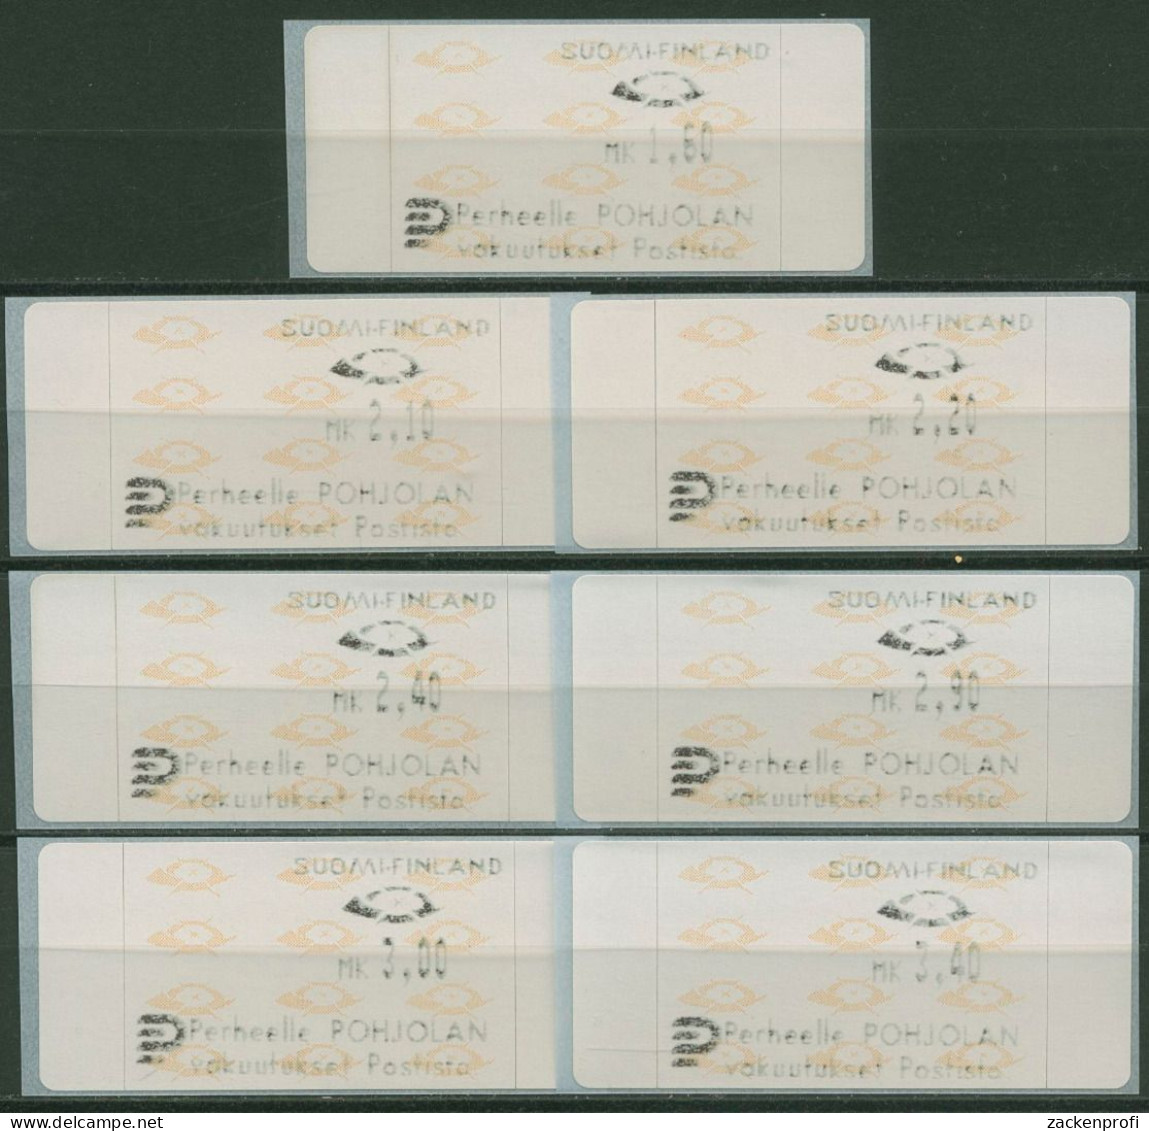 Finnland Automatenmarken 1992 Posthörner Satz 7 Werte ATM 12.3 S1 Postfrisch - Timbres De Distributeurs [ATM]